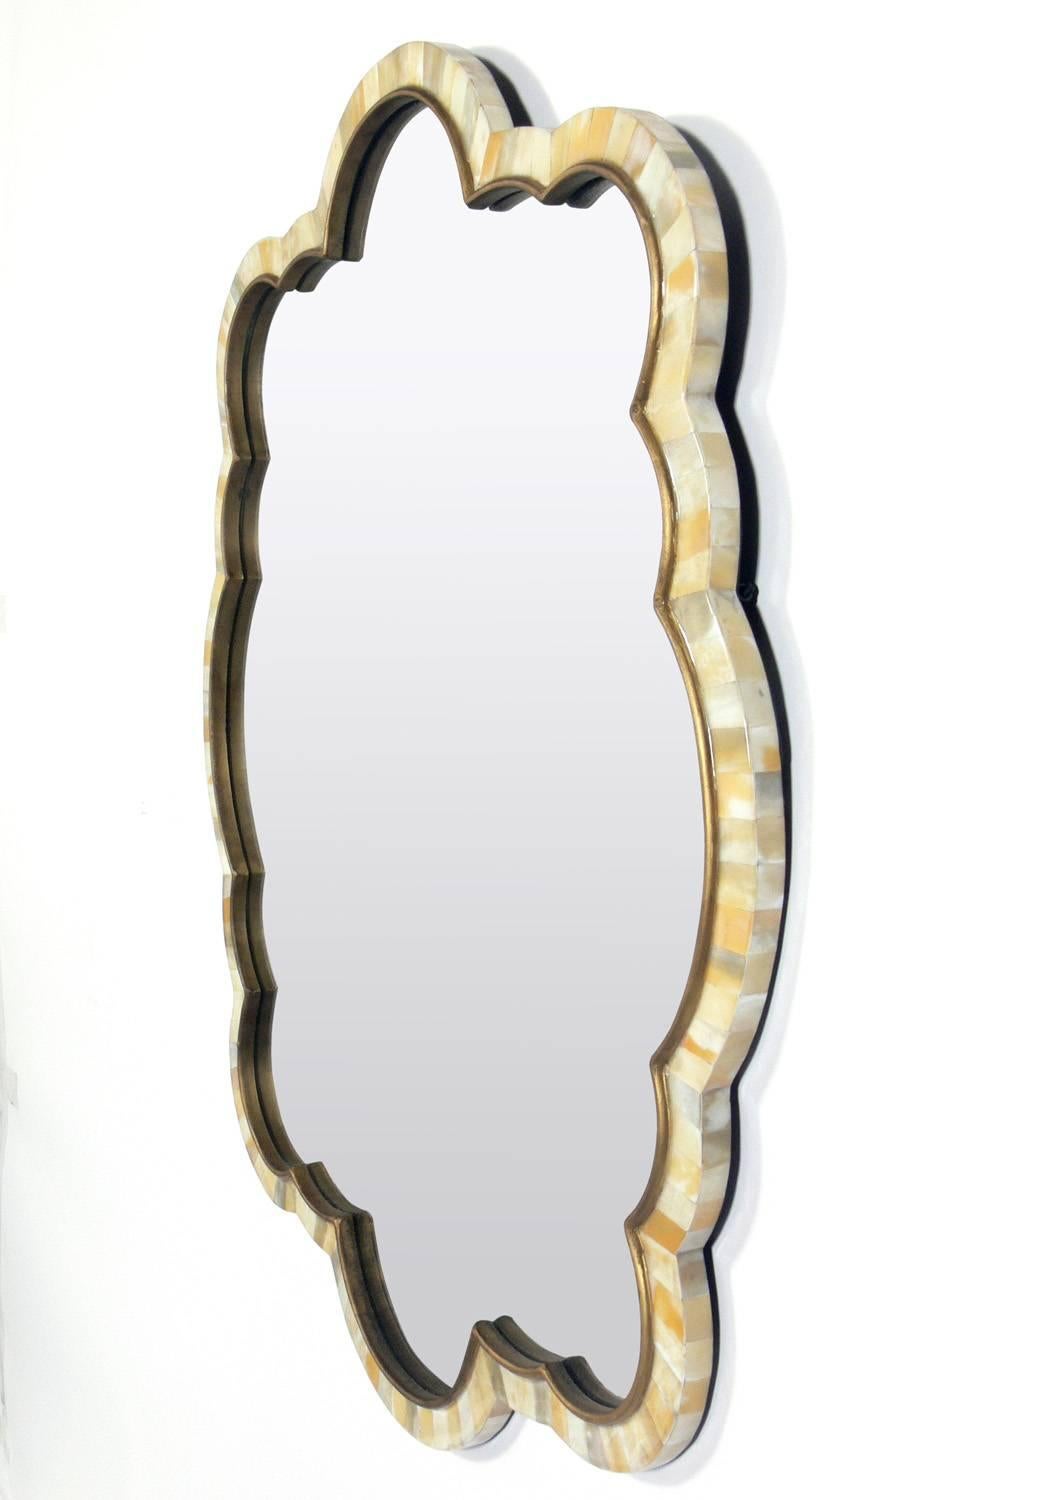 Glamorous tessellated bone or horn mirror, circa 2000s.